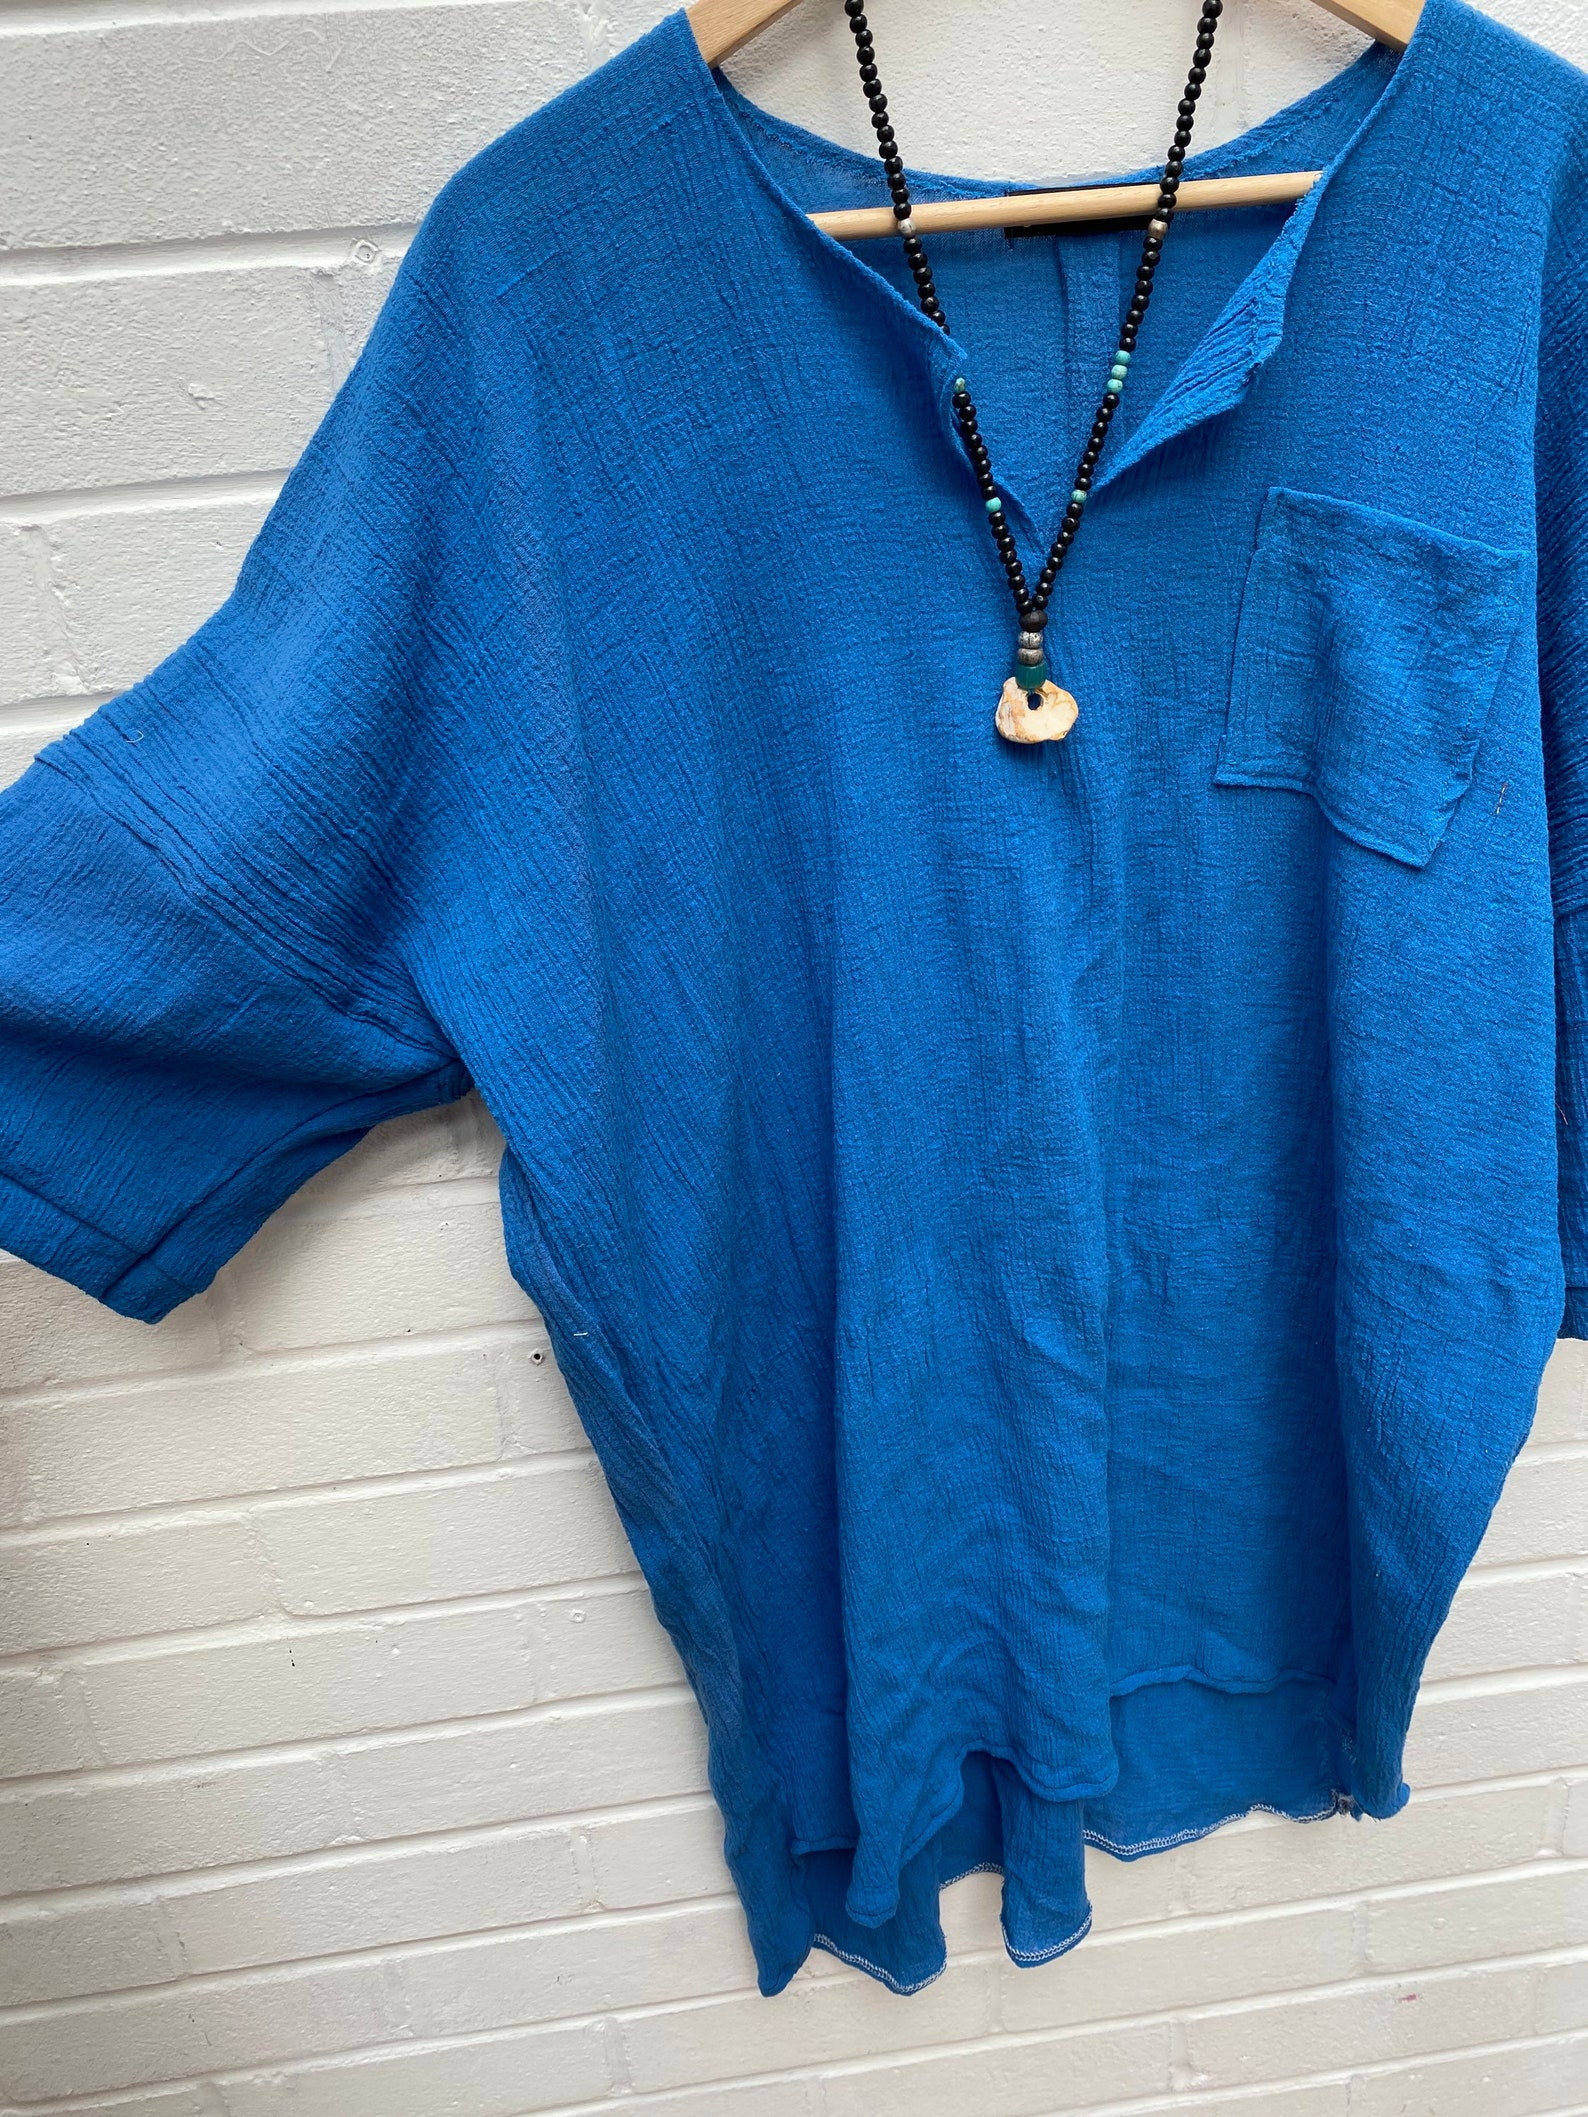 TRENDYBEGGARz Men's Cheese Cloth T Shirt in Blue Free | Etsy